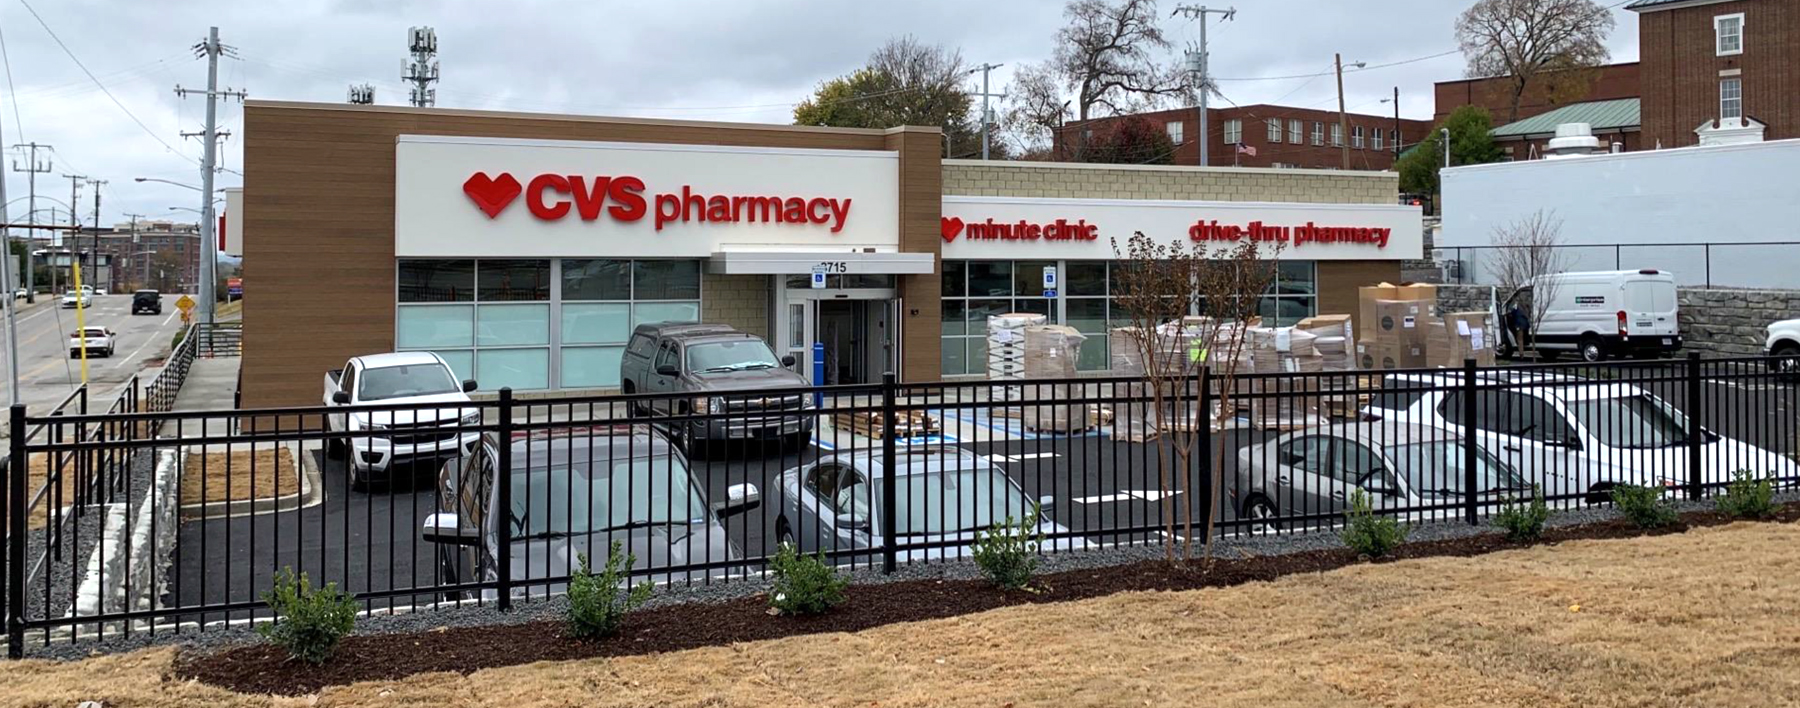 New CVS Pharmacy in Nashville, Tennessee | GLR, Inc.